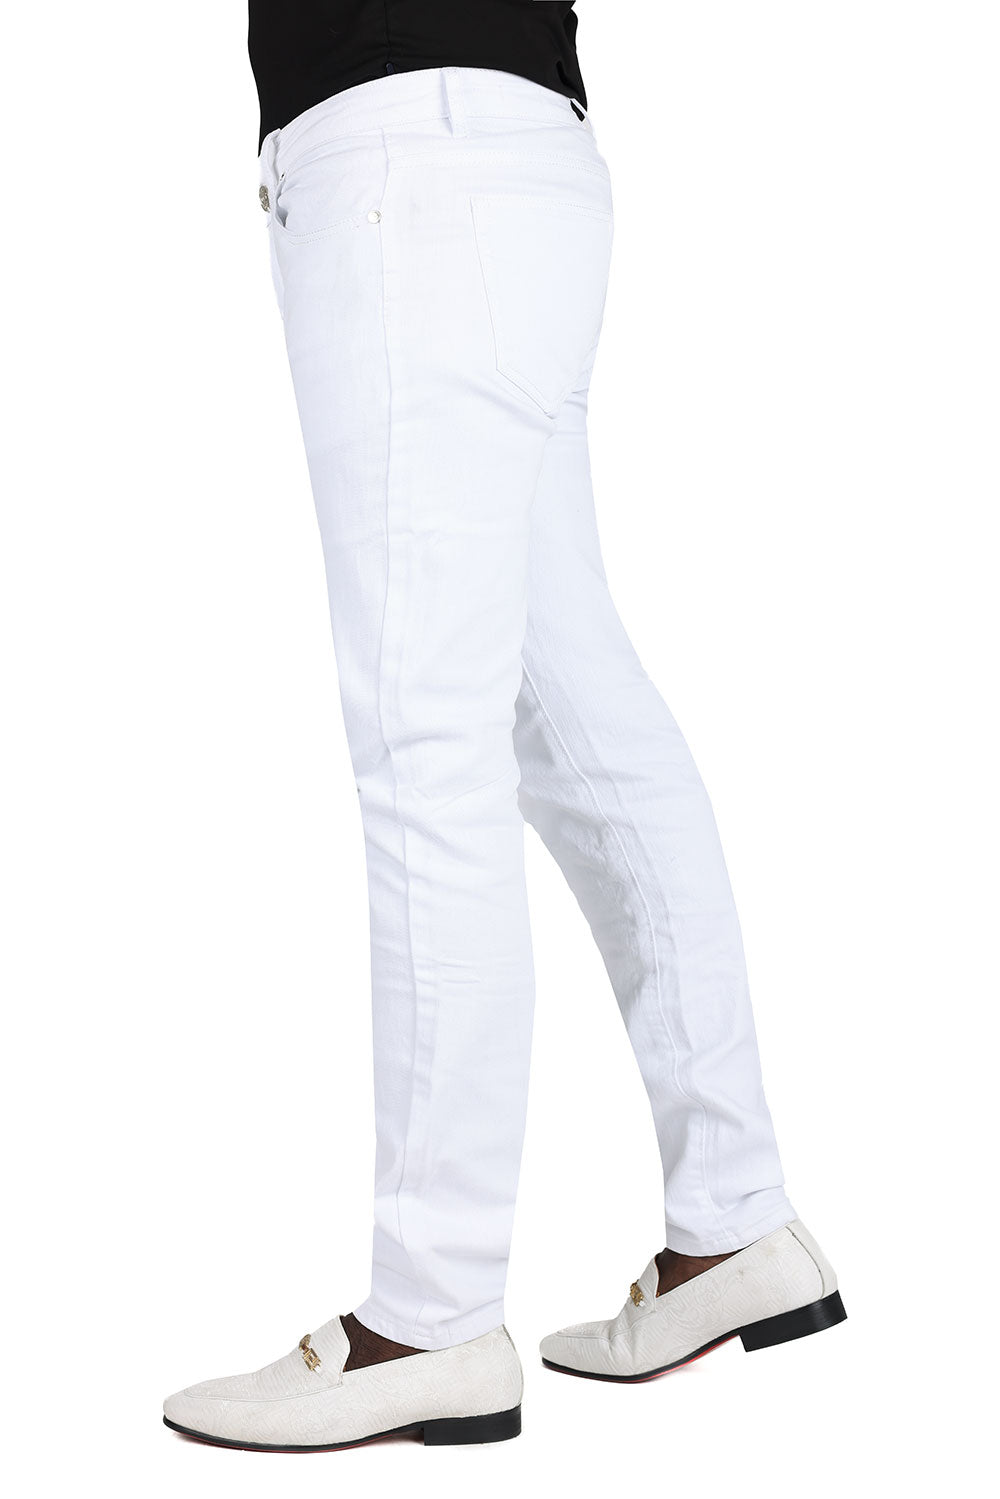 Barabas Men's Solid Color Premium Contemporary Denim Jeans 2JE40